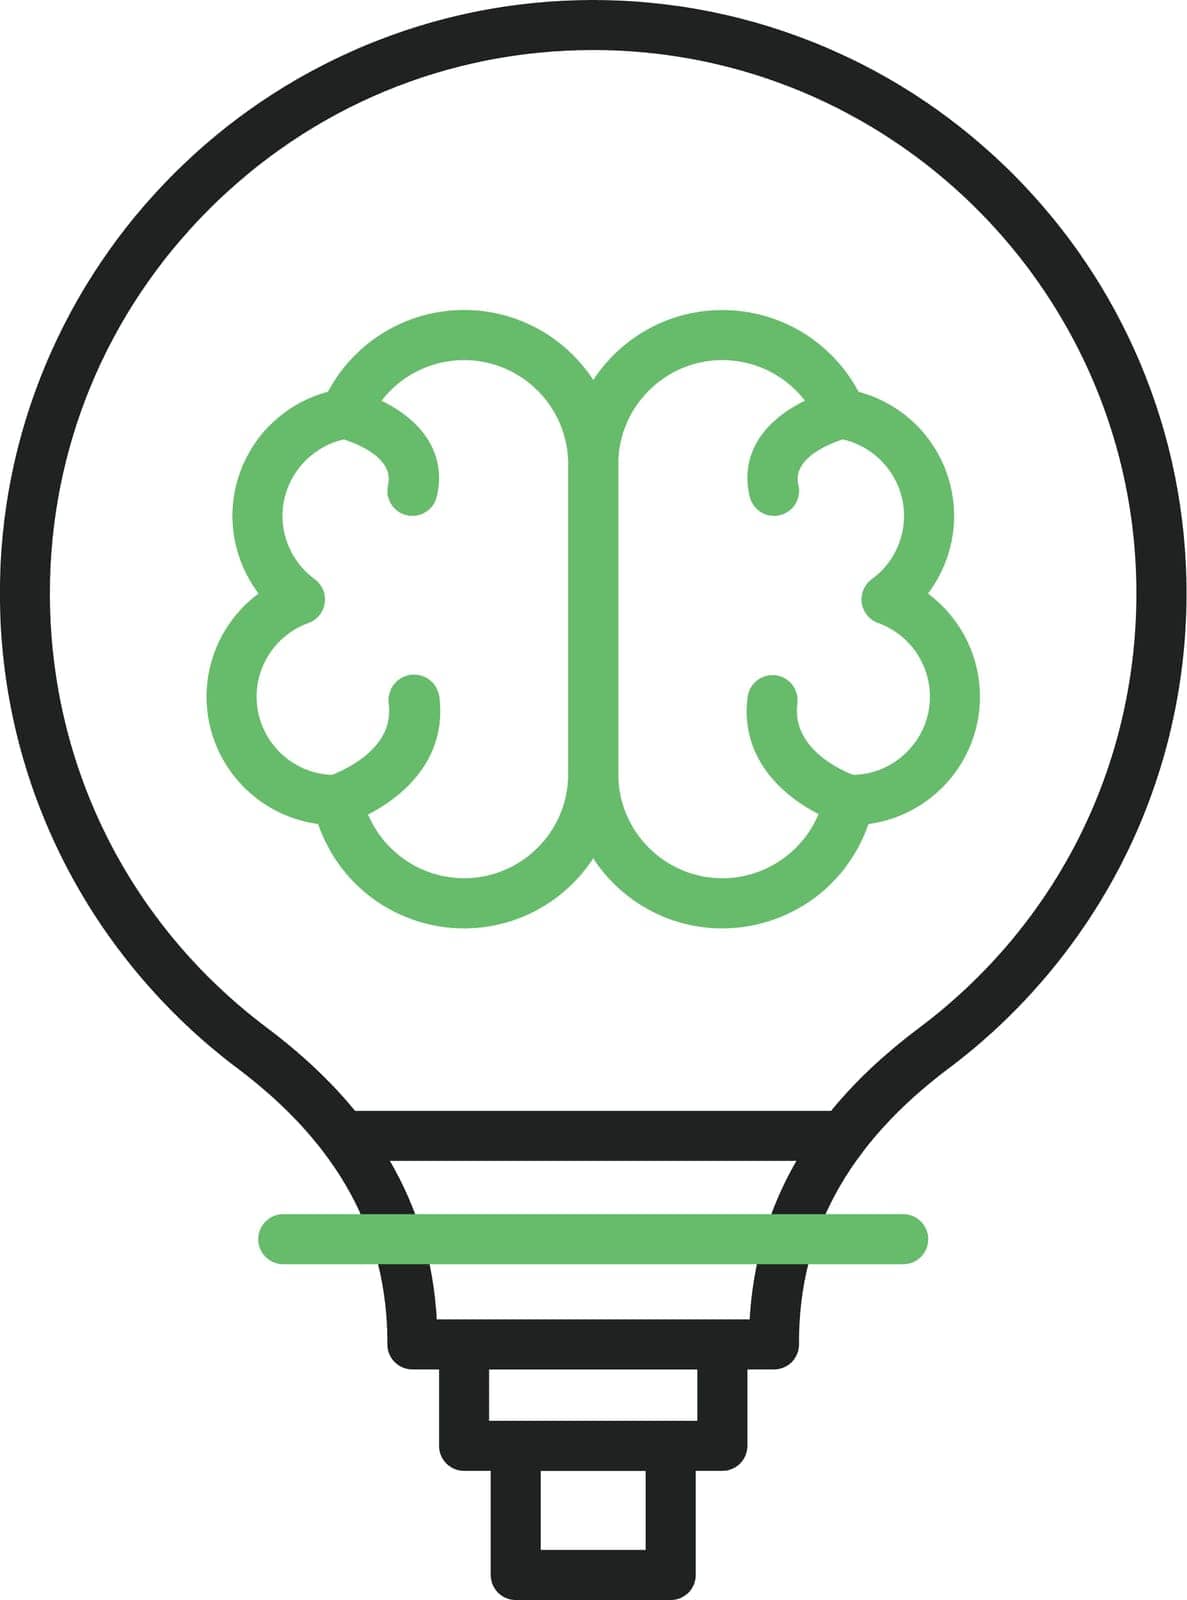 Brainstorm Icon Image. by ICONBUNNY